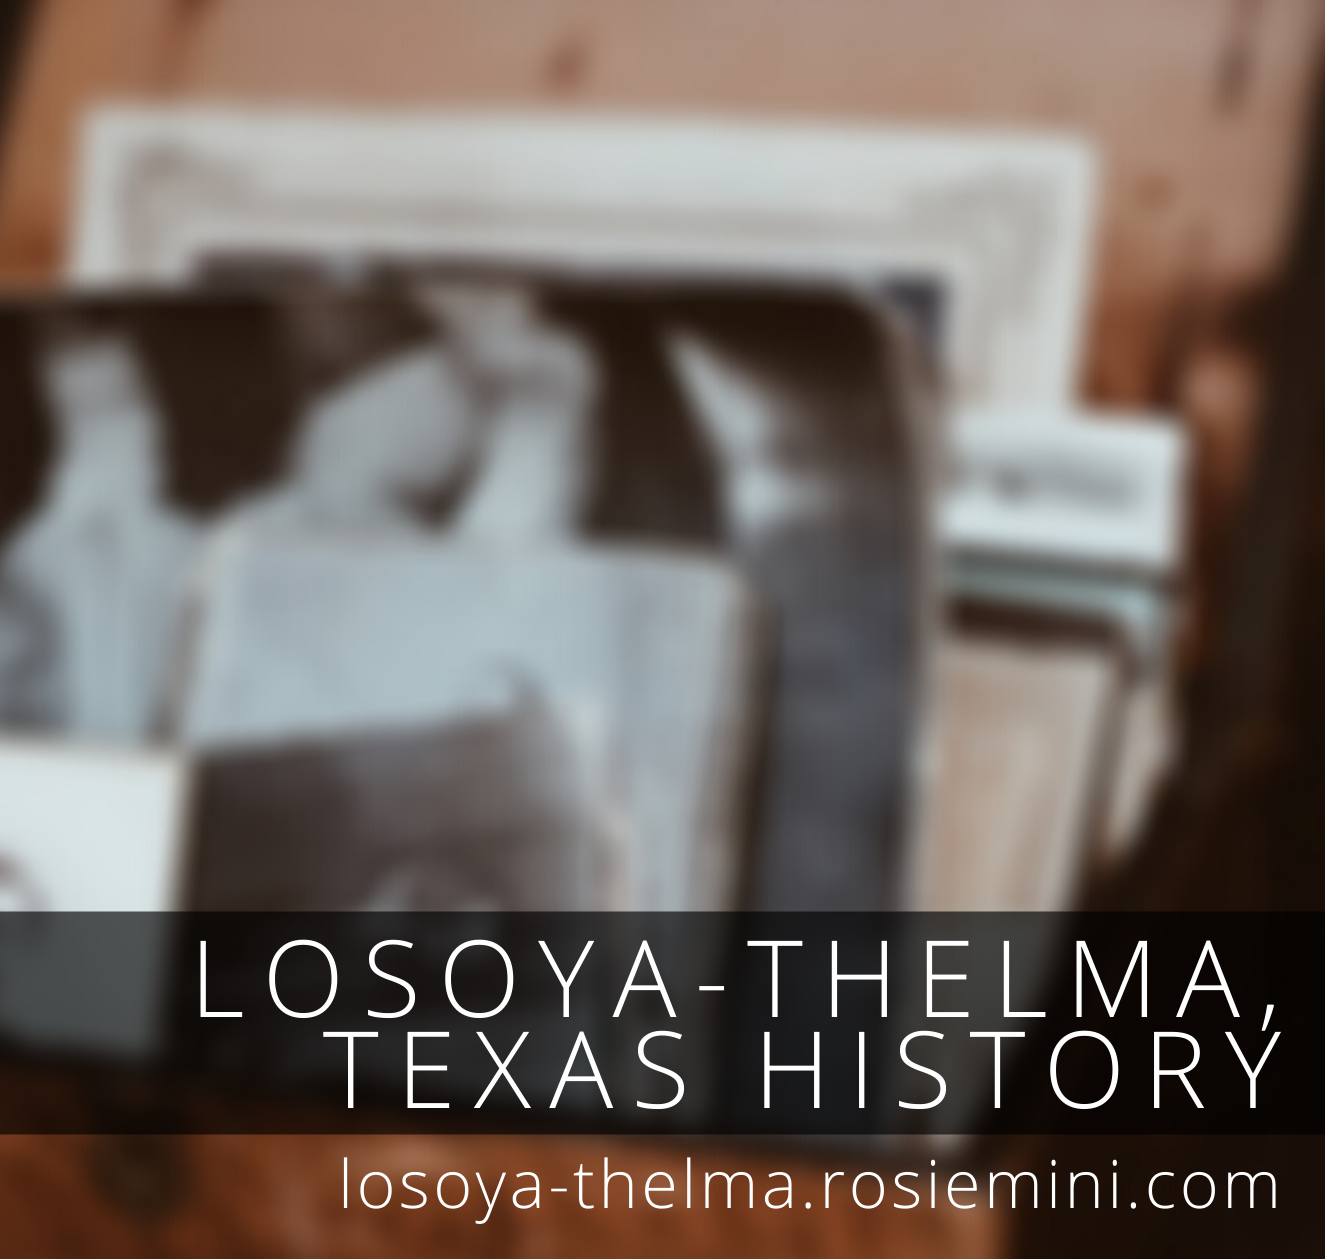 Losoya-Thelma, Texas History Online